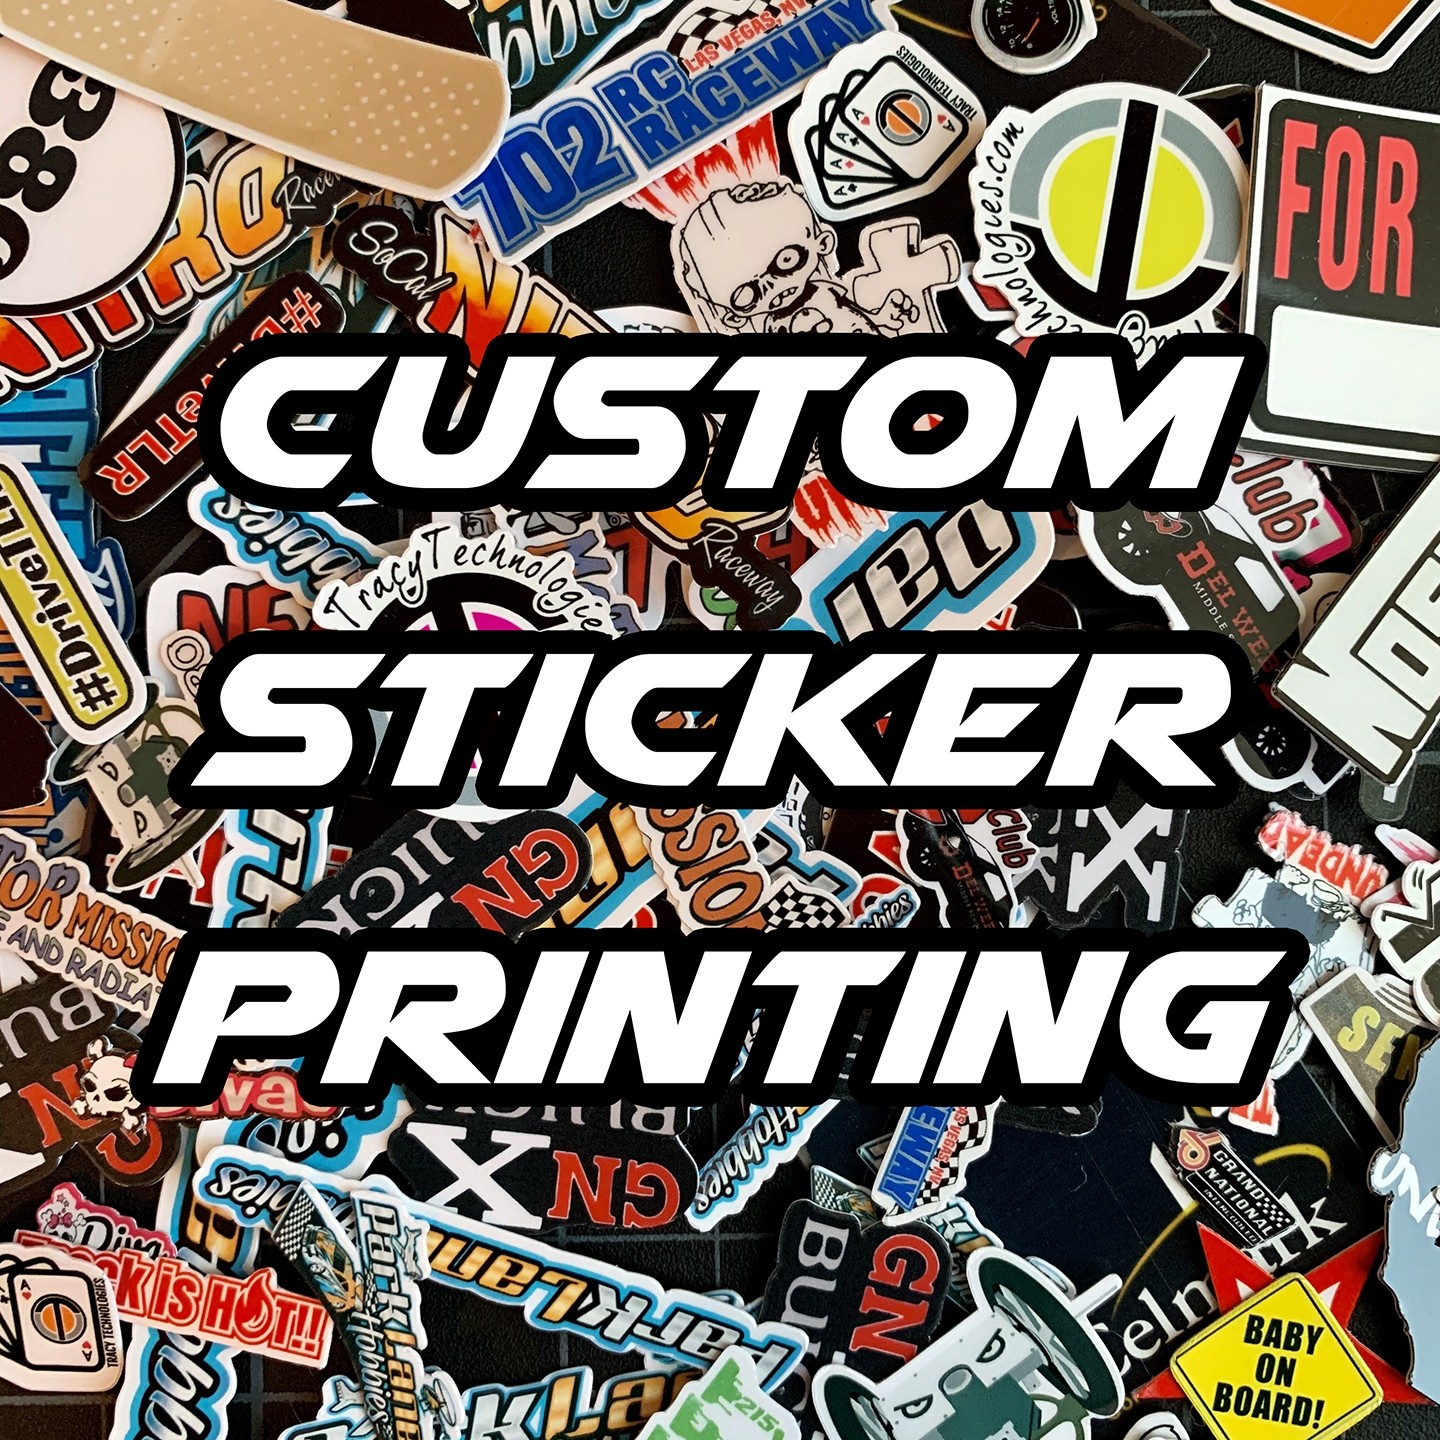 Custom Die Cut Stickers - Free Shipping